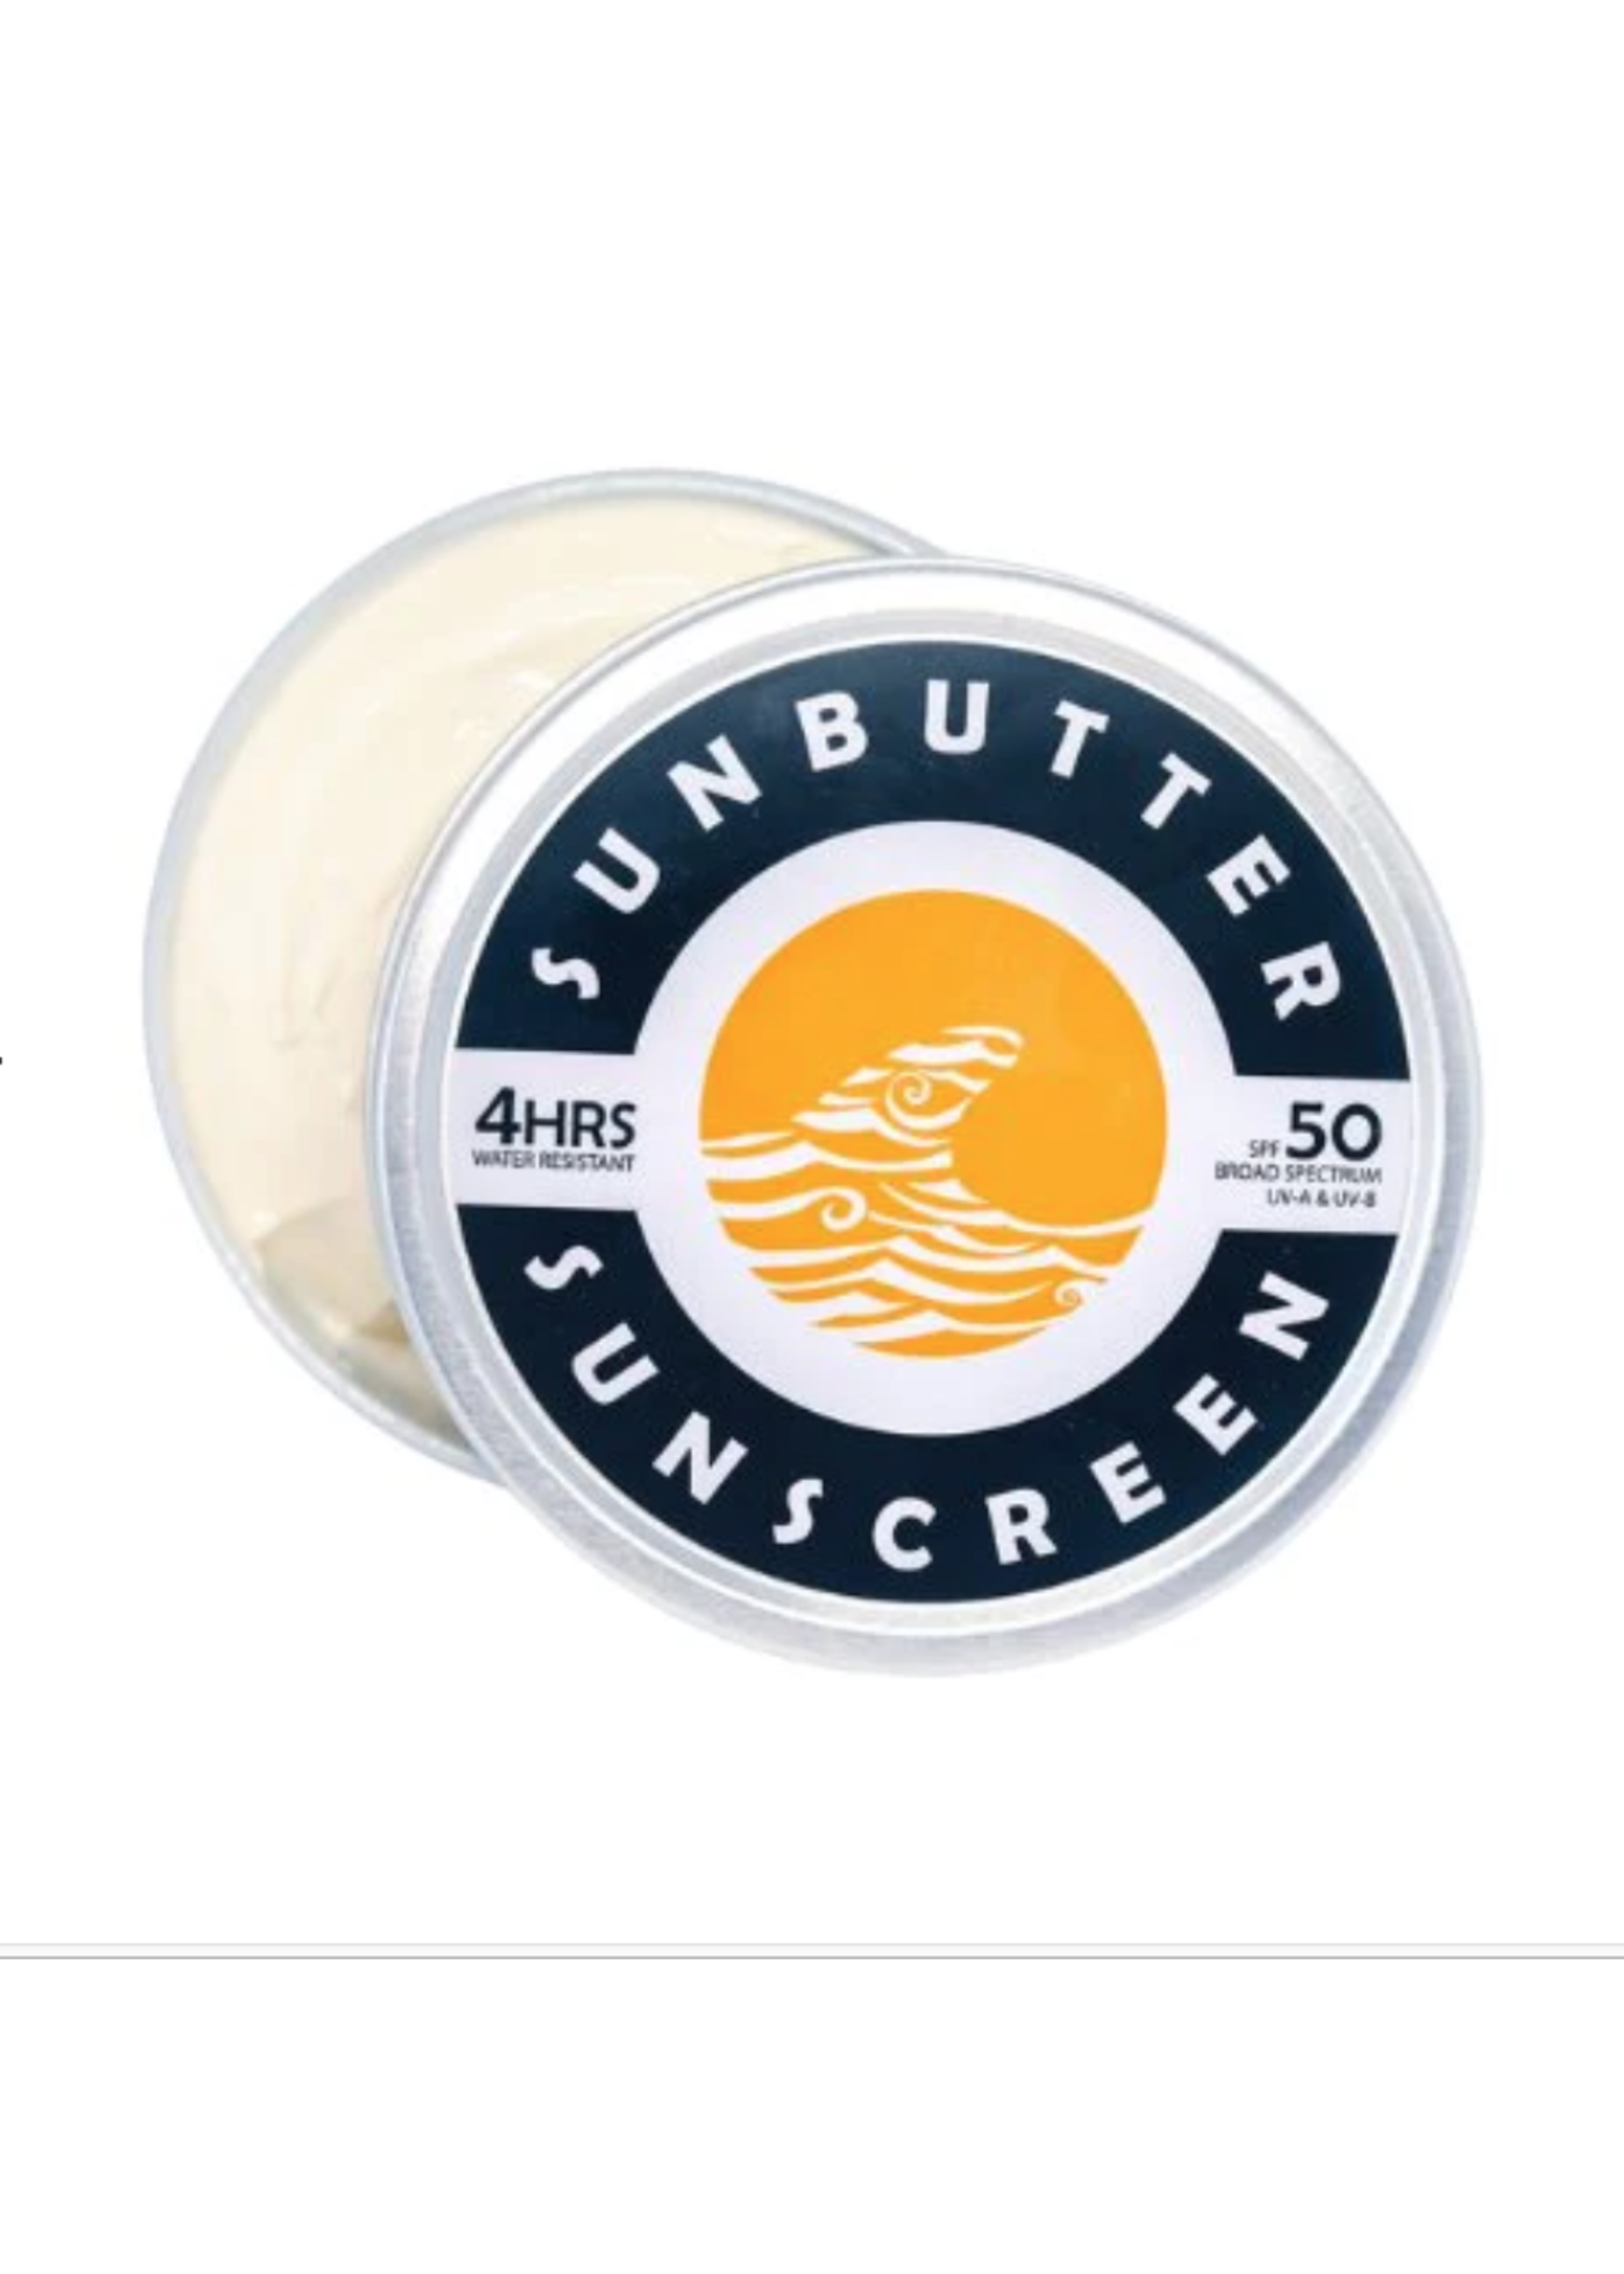 Sunbutter Sunbutter Skincare Sunscreen SPF50 100g tin